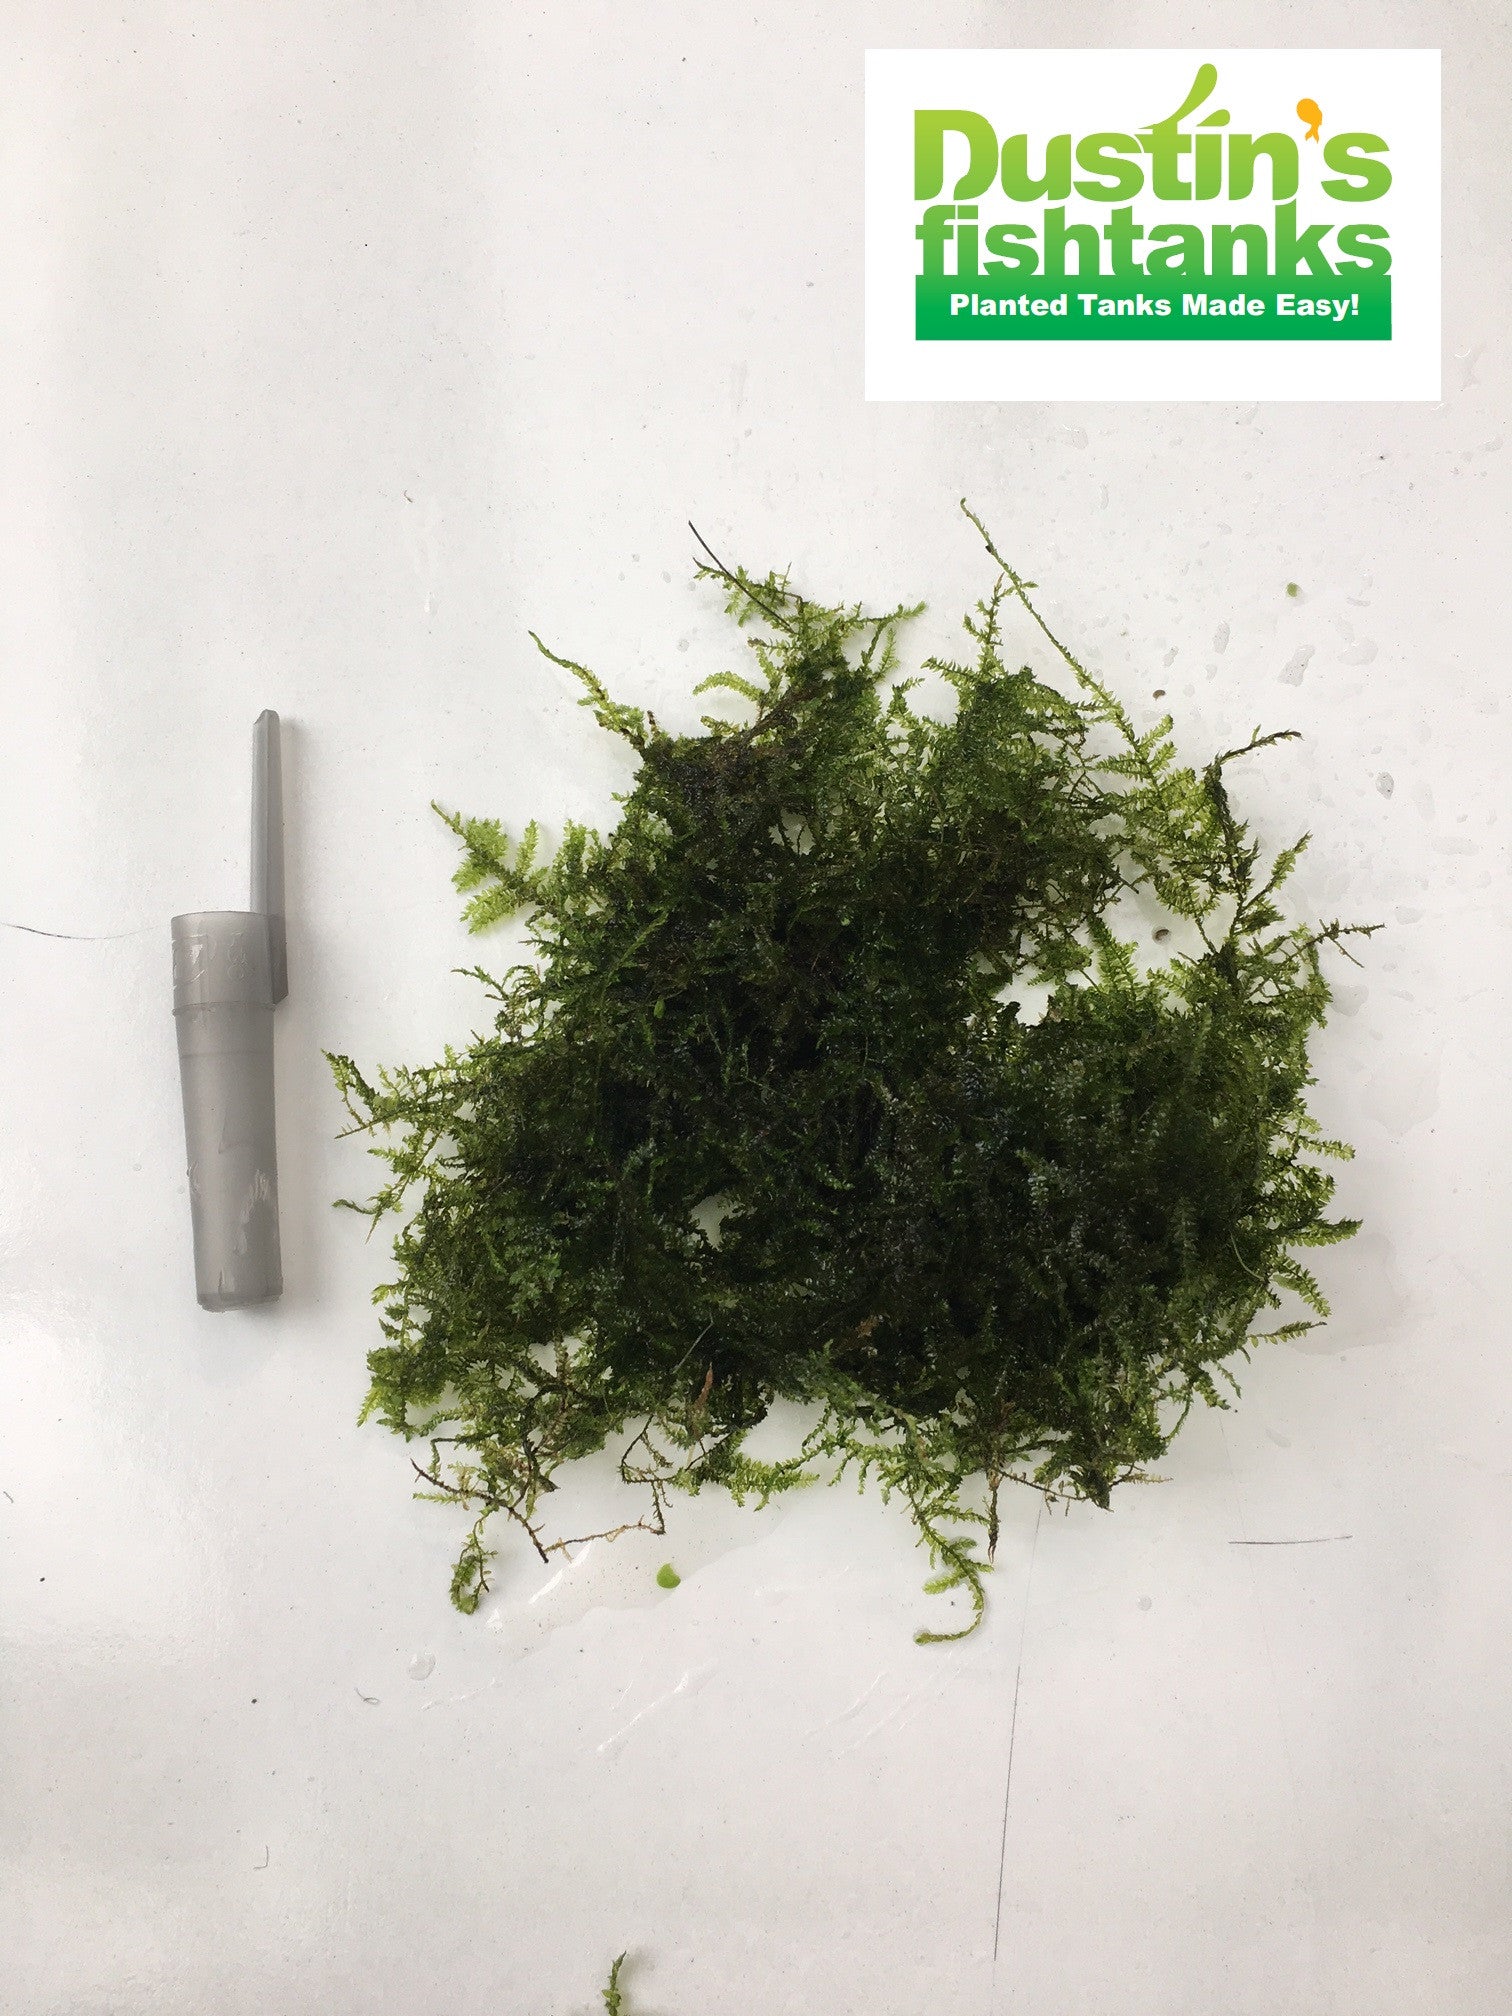 AdventBotany 2021 – Day 9 - Christmas moss - Herbarium RNG